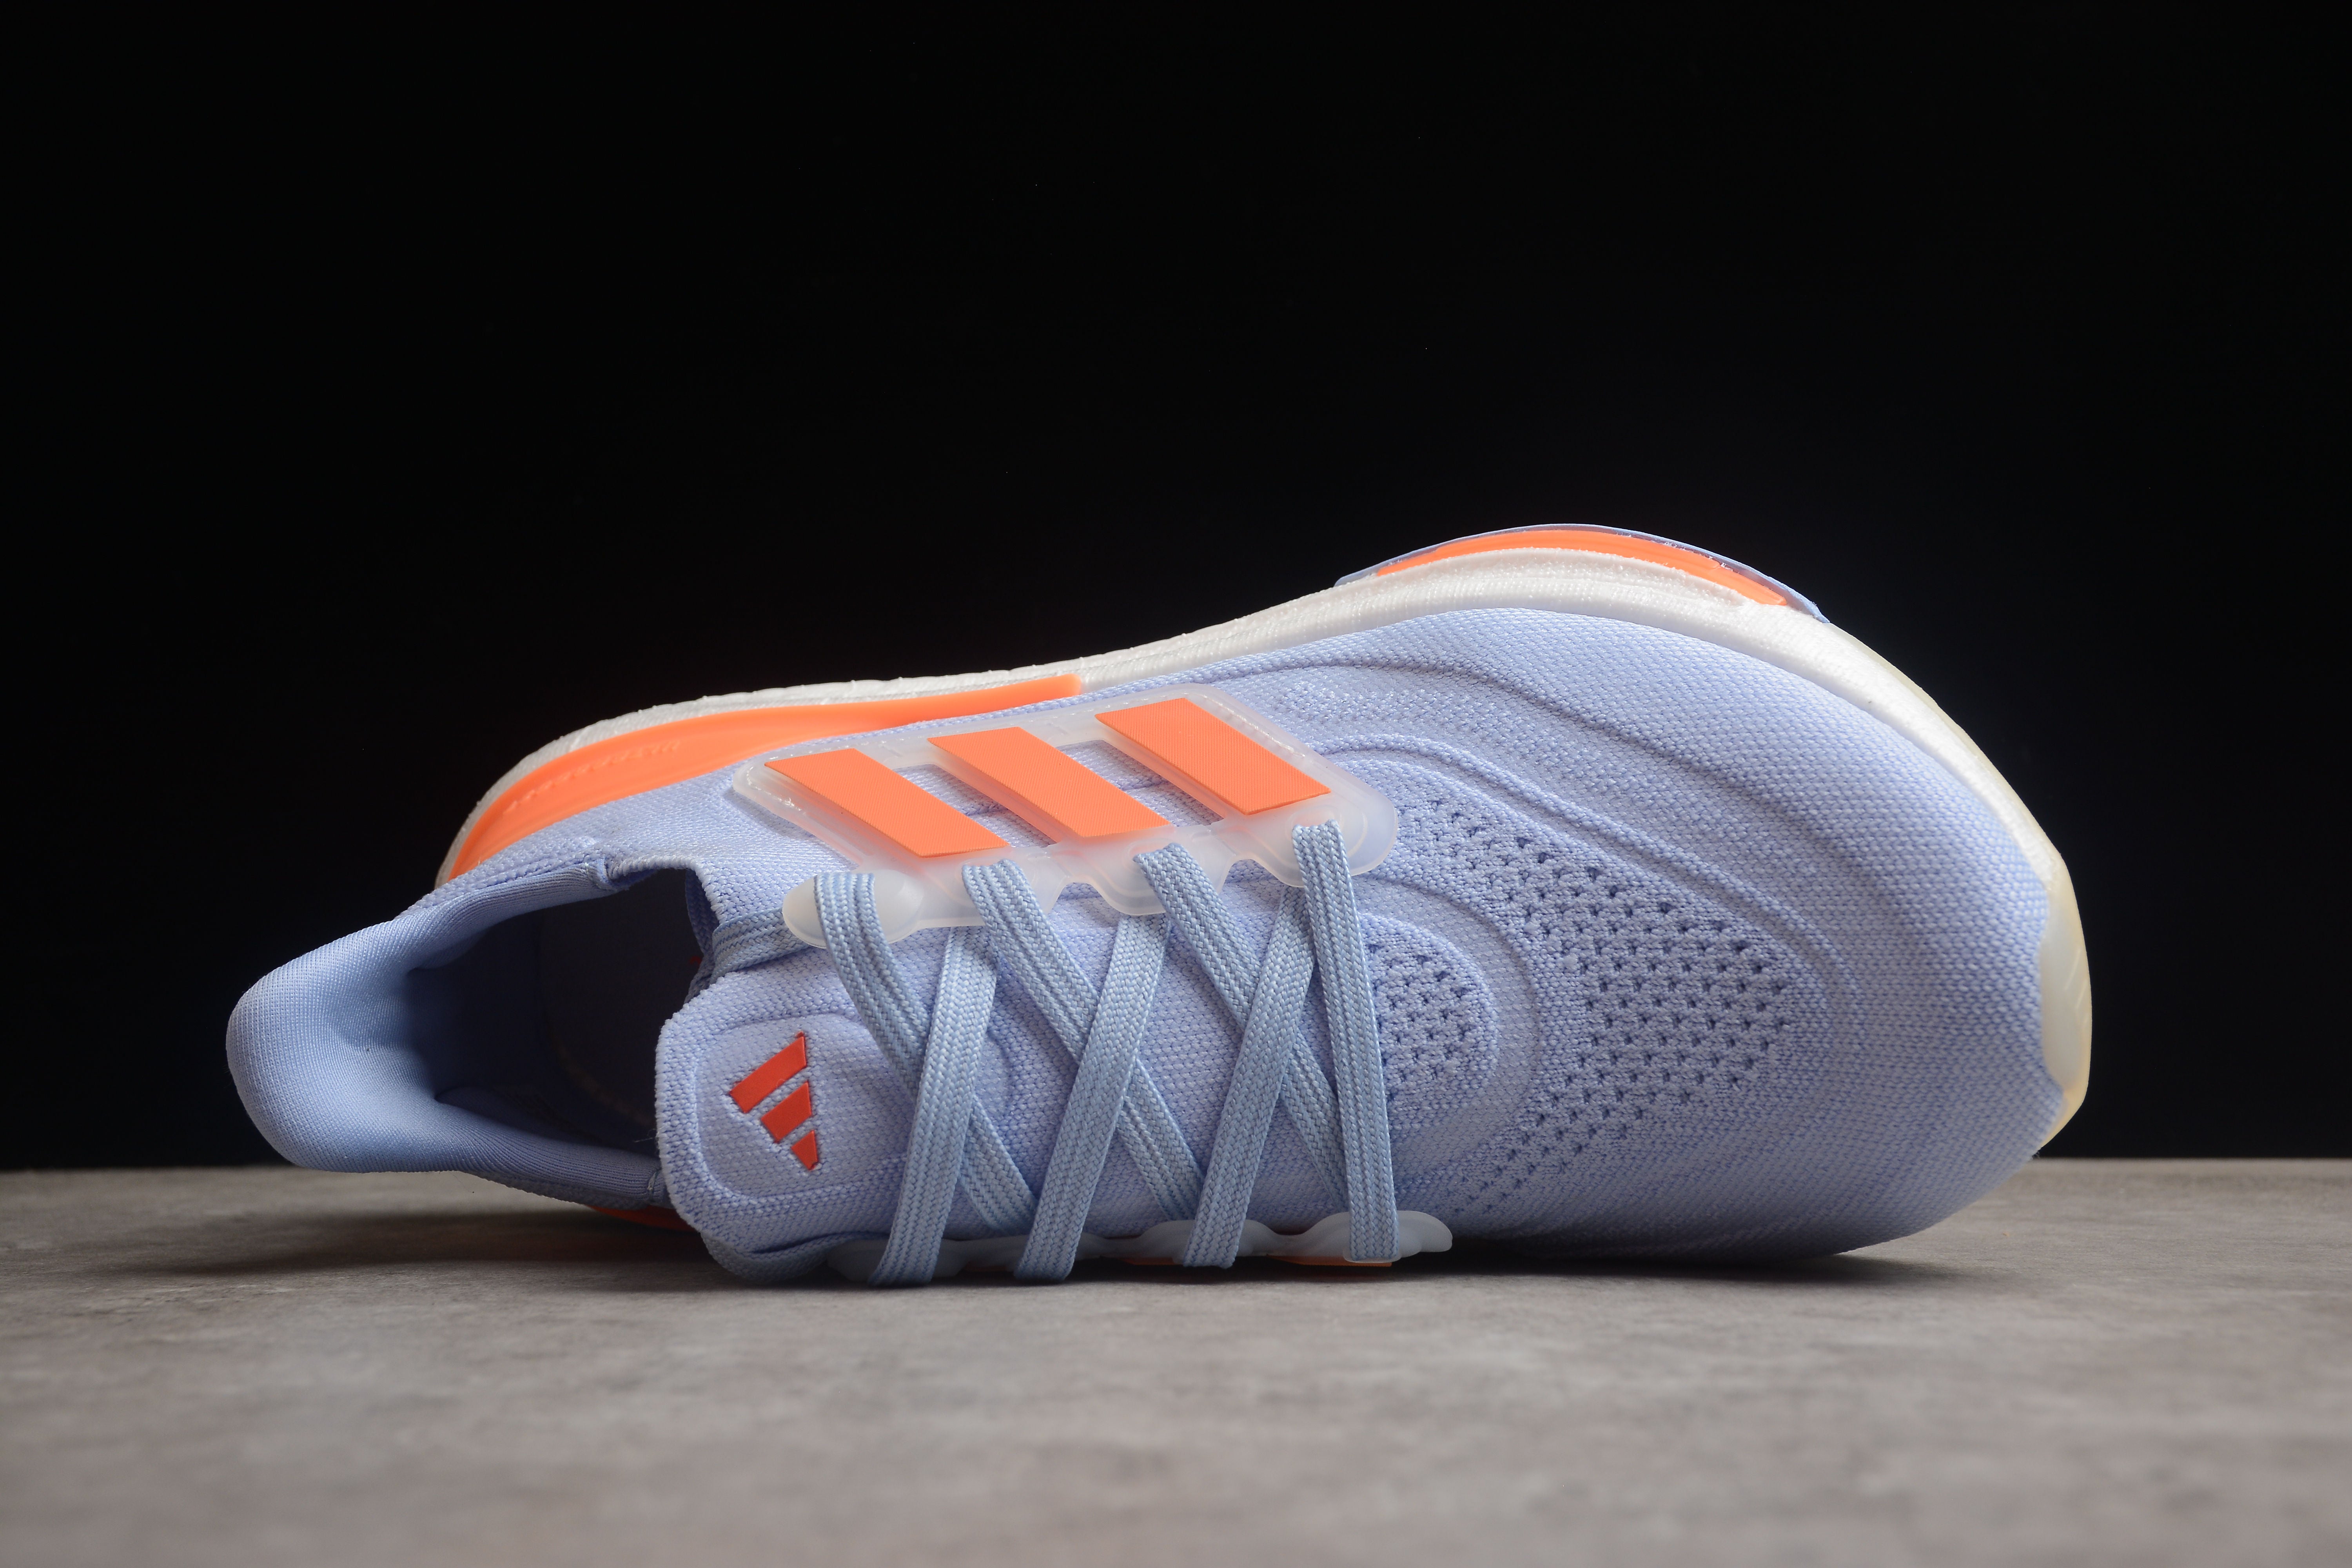 Adidas ultraboost light purple/orange shoes